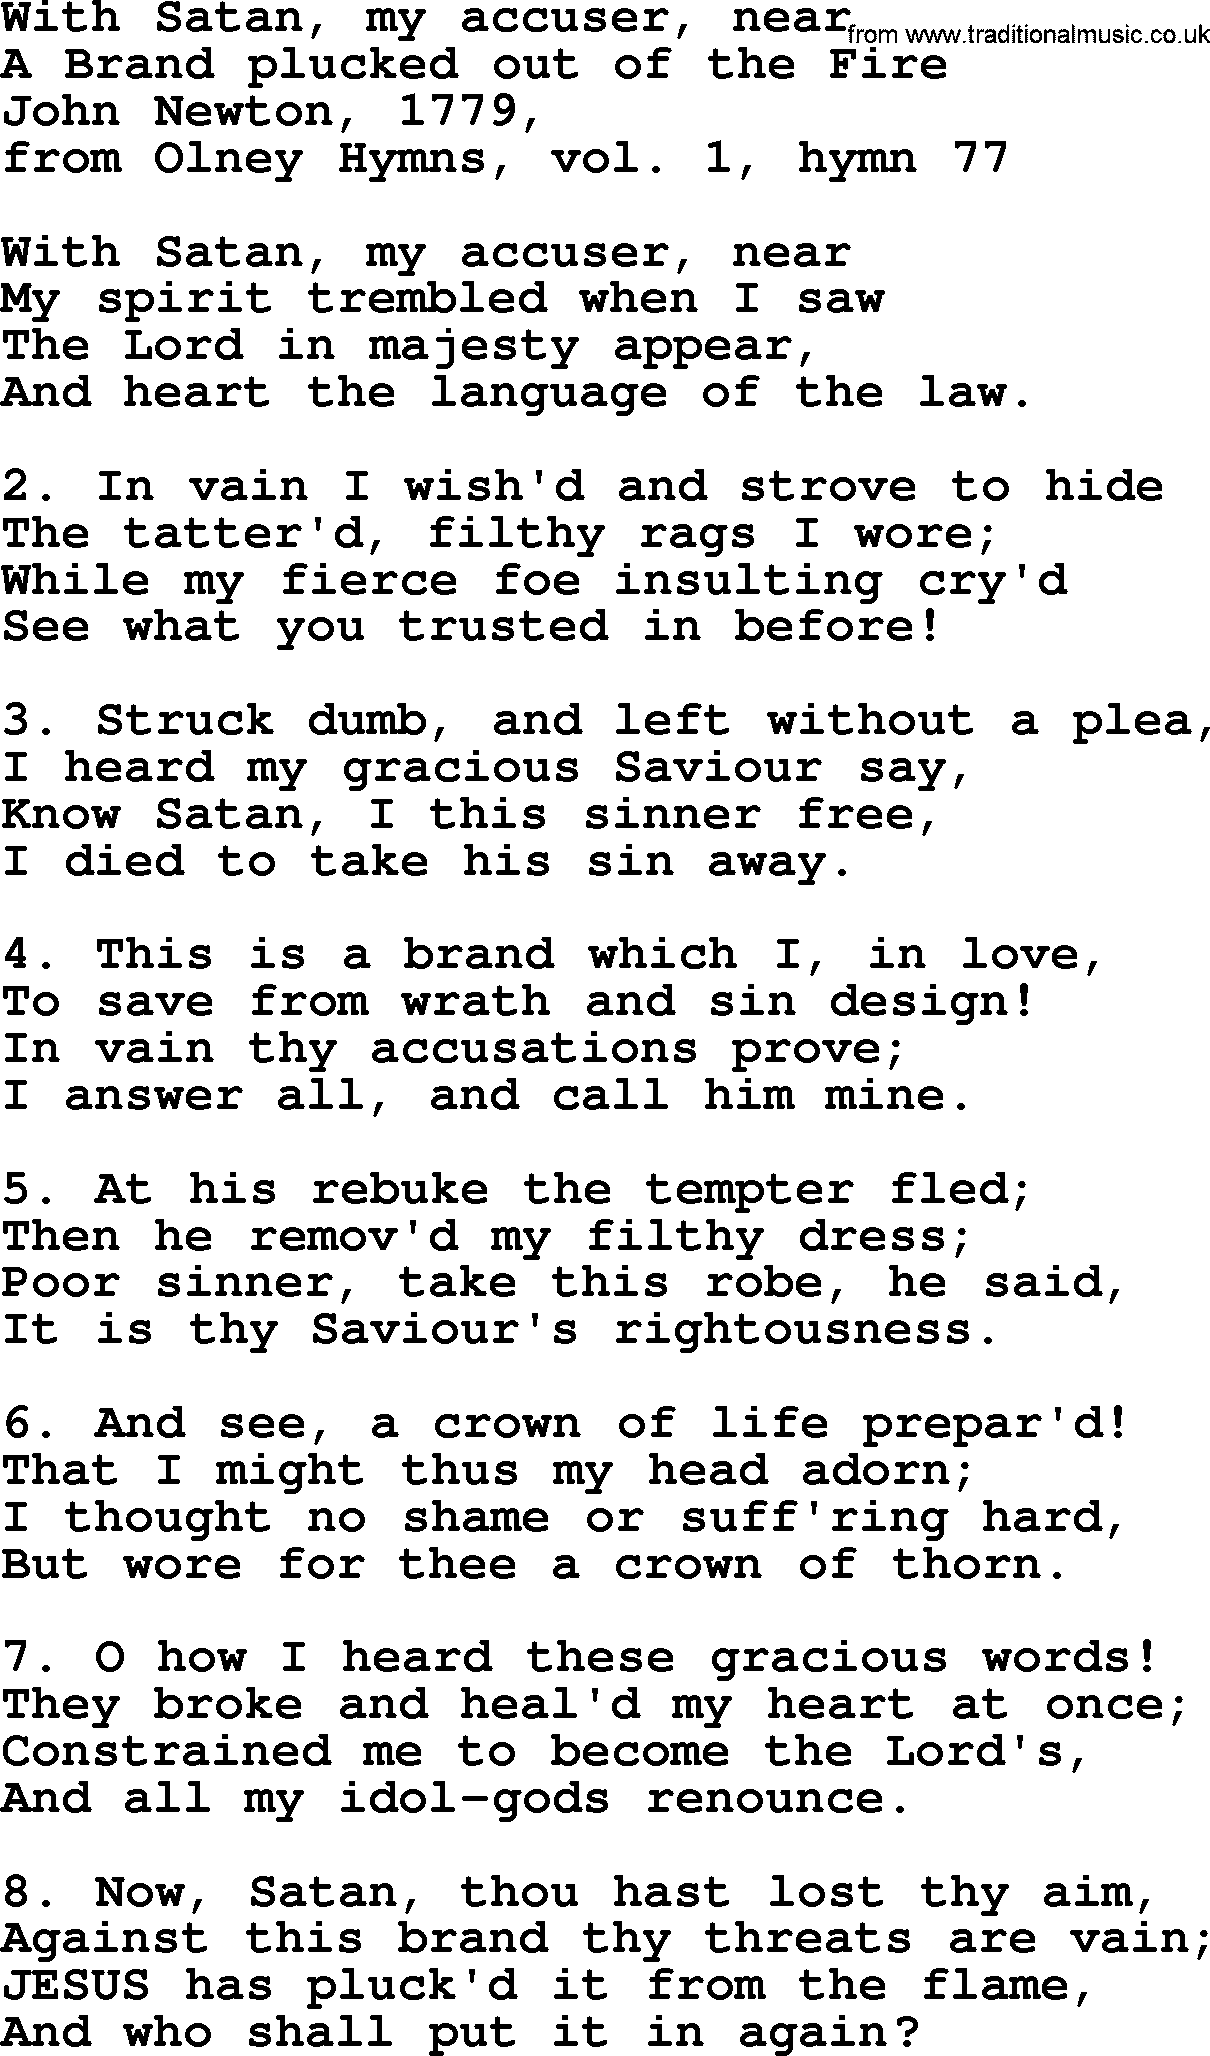 John Newton hymn: With Satan, My Accuser, Near, lyrics